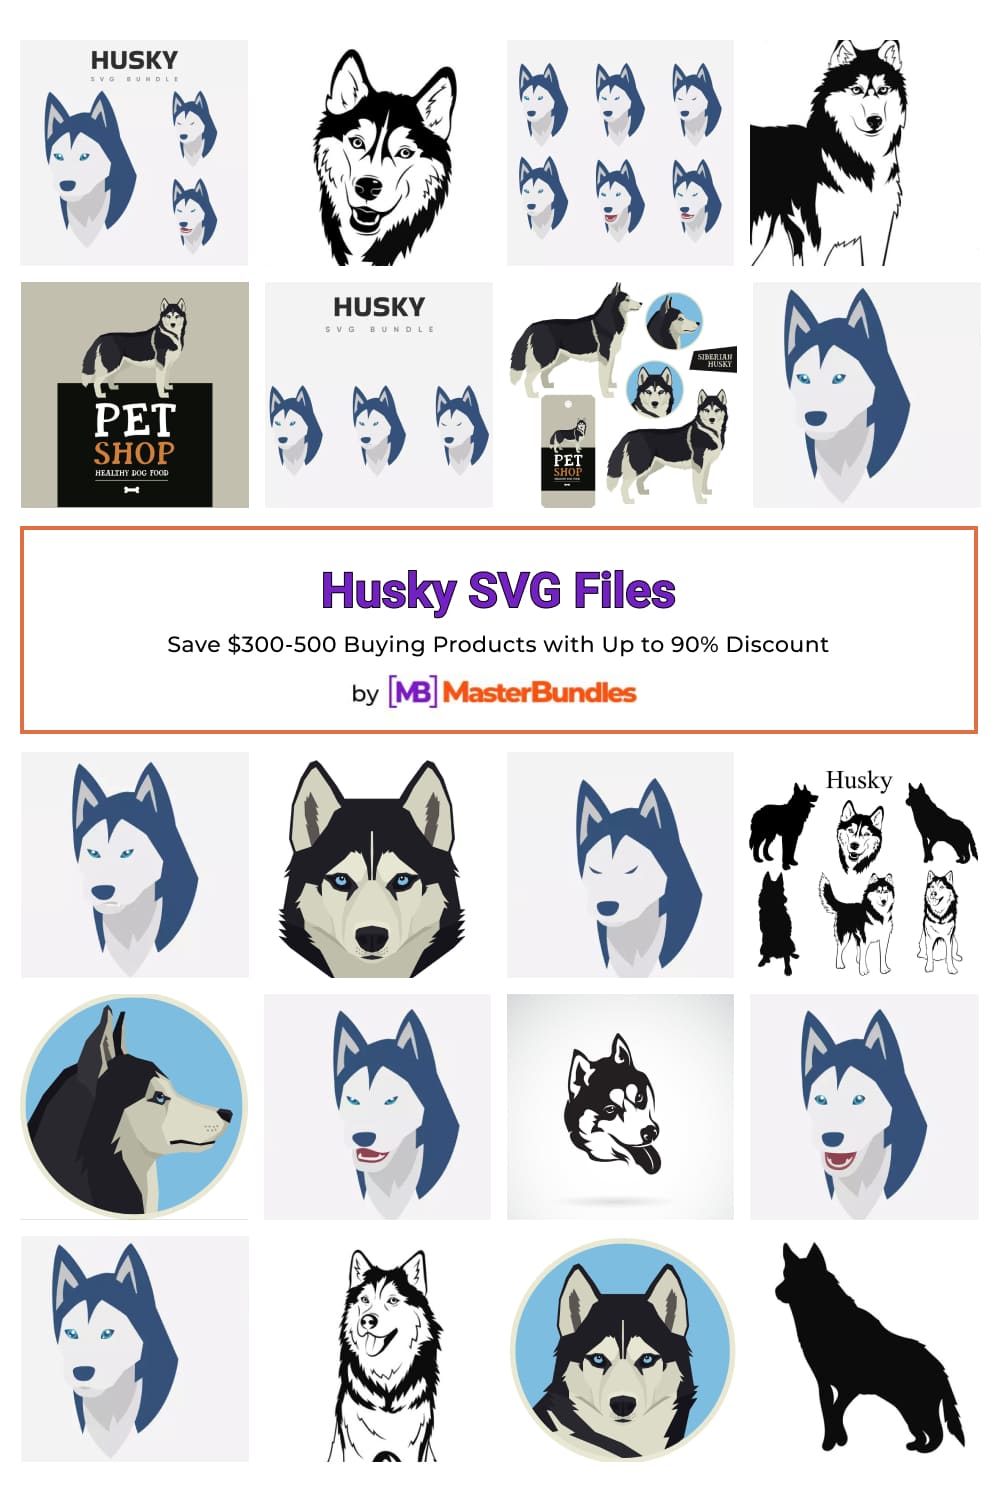 Husky SVG Files for pinterest.